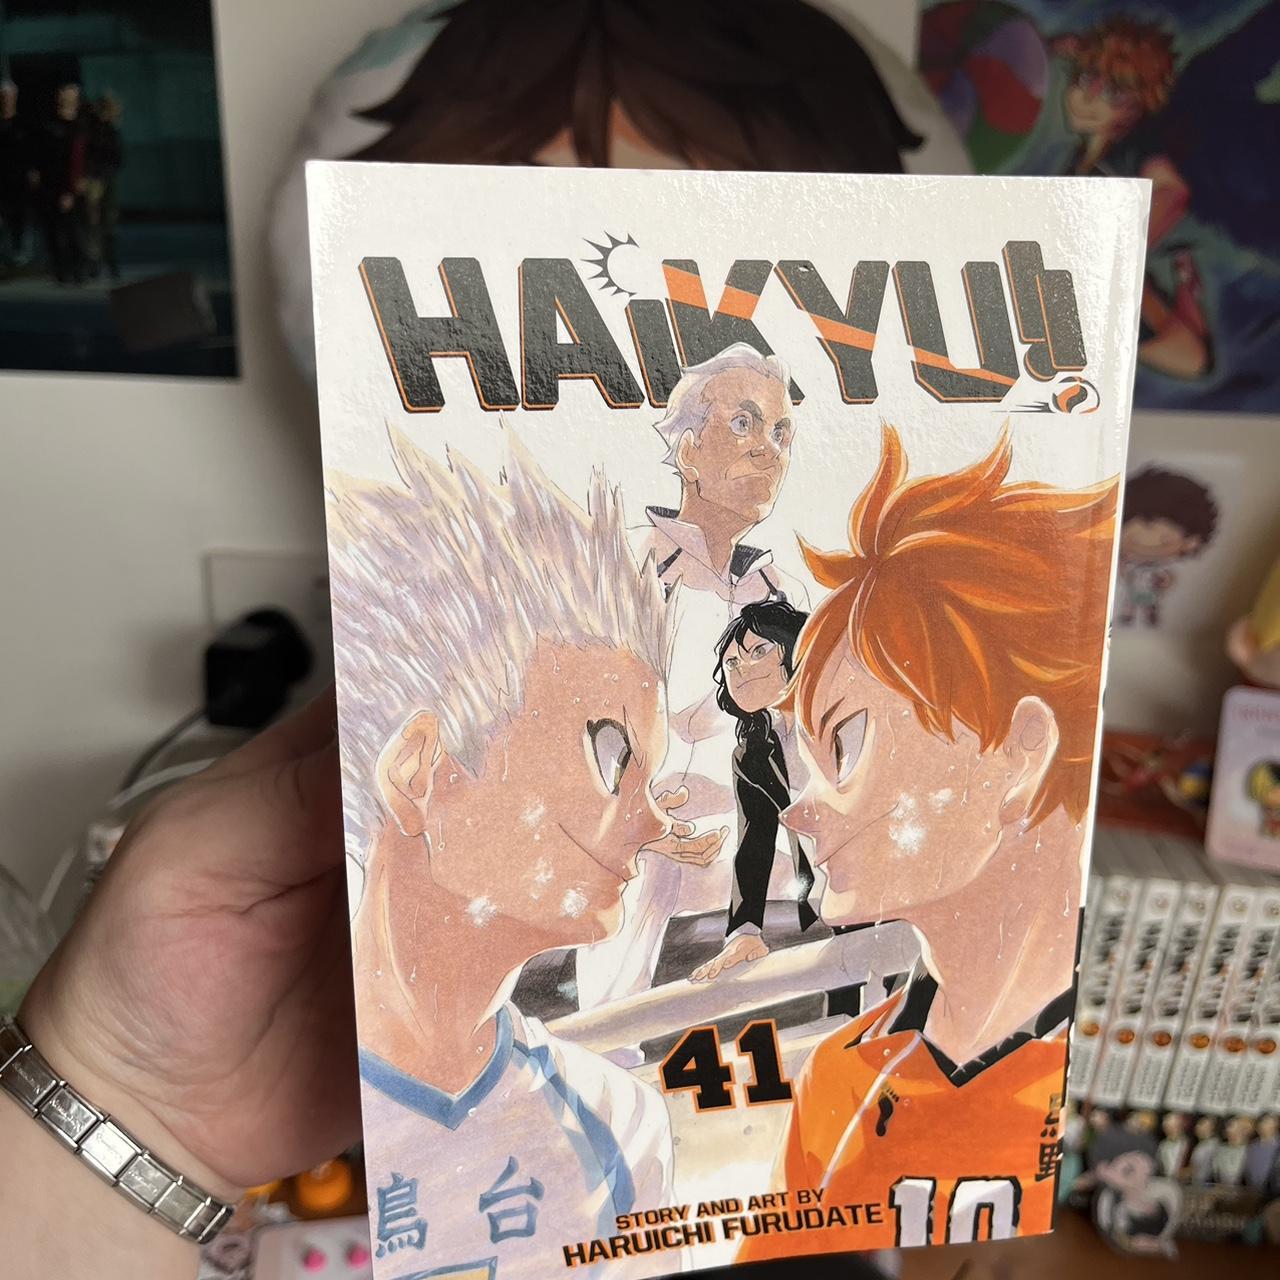 Haikyuu BR - Capa do volume 41 do mangá de Haikyuu. Pra